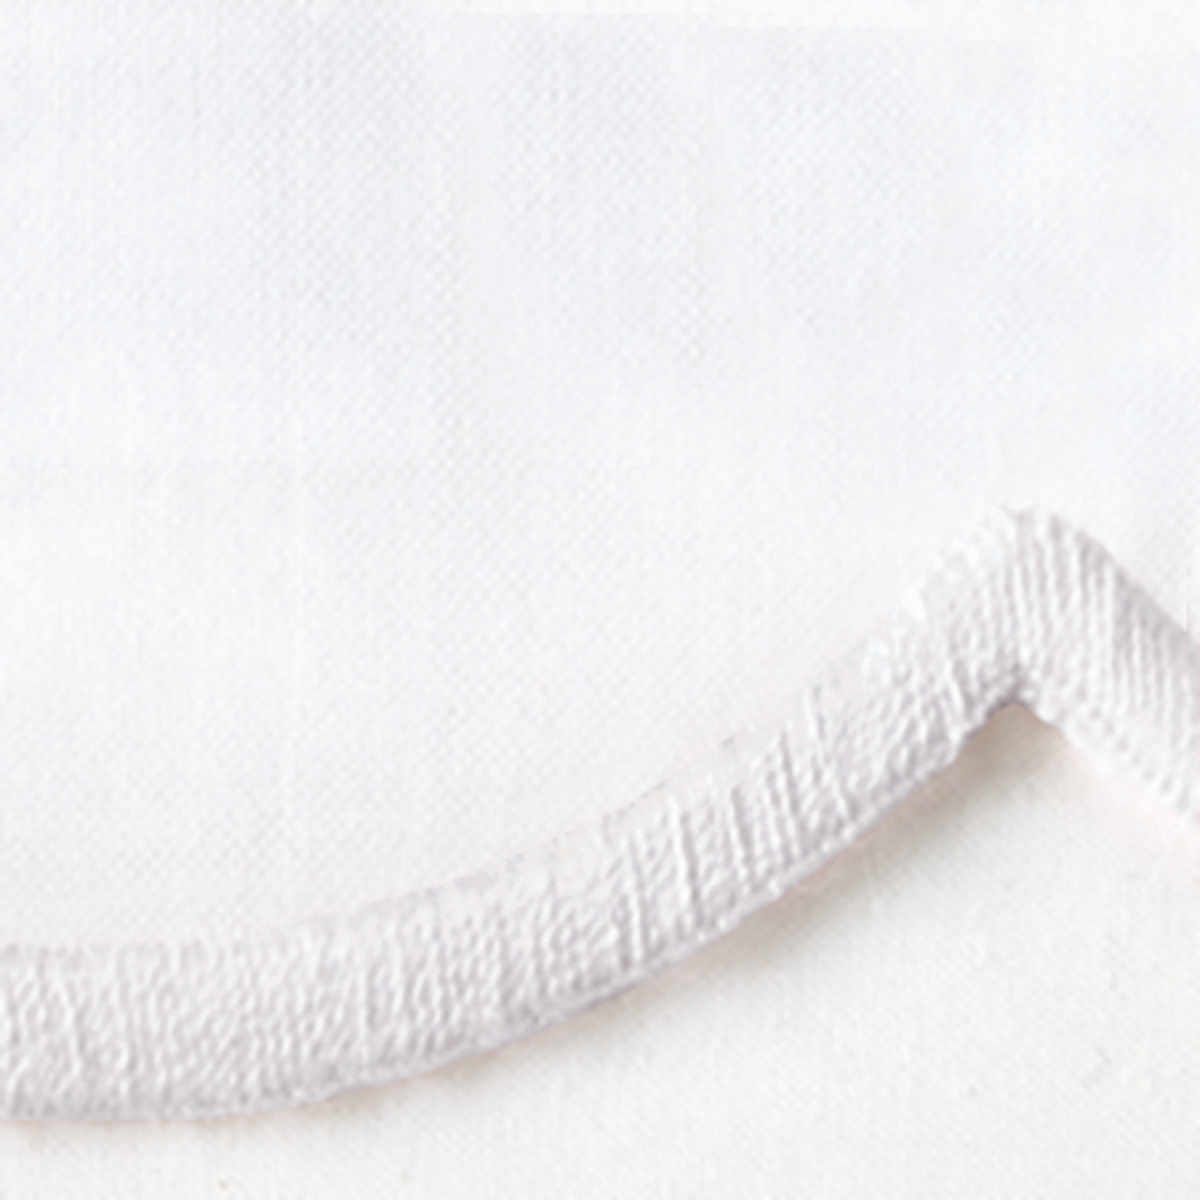 Swatch Sample of Matouk Dakota Bedding in White Color